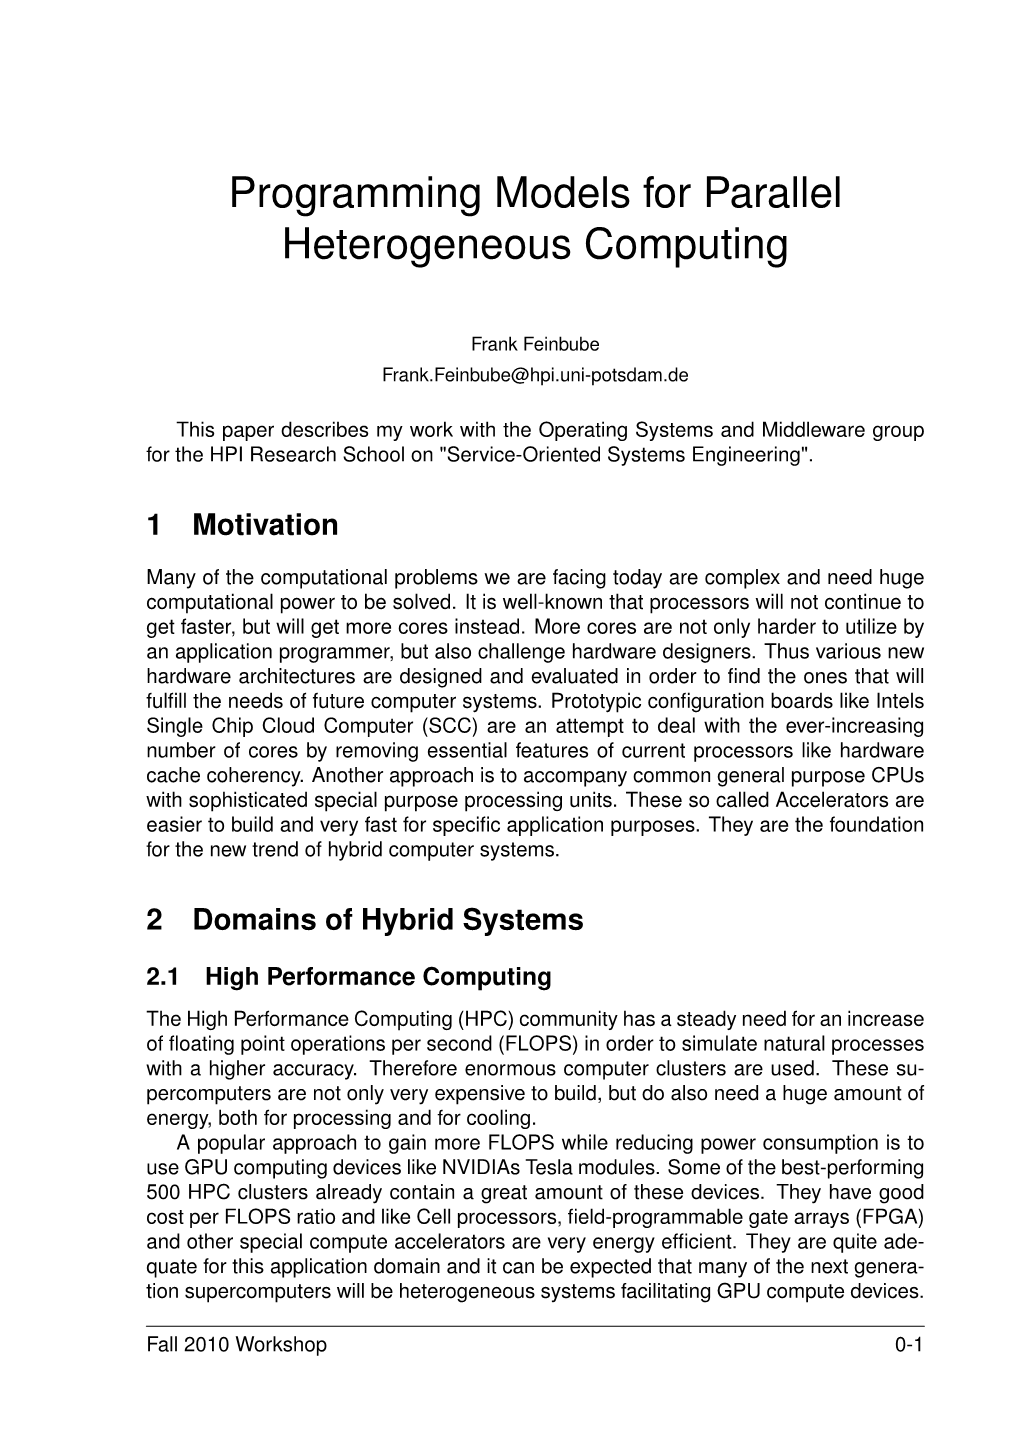 Programming Models for Parallel Heterogeneous Computing